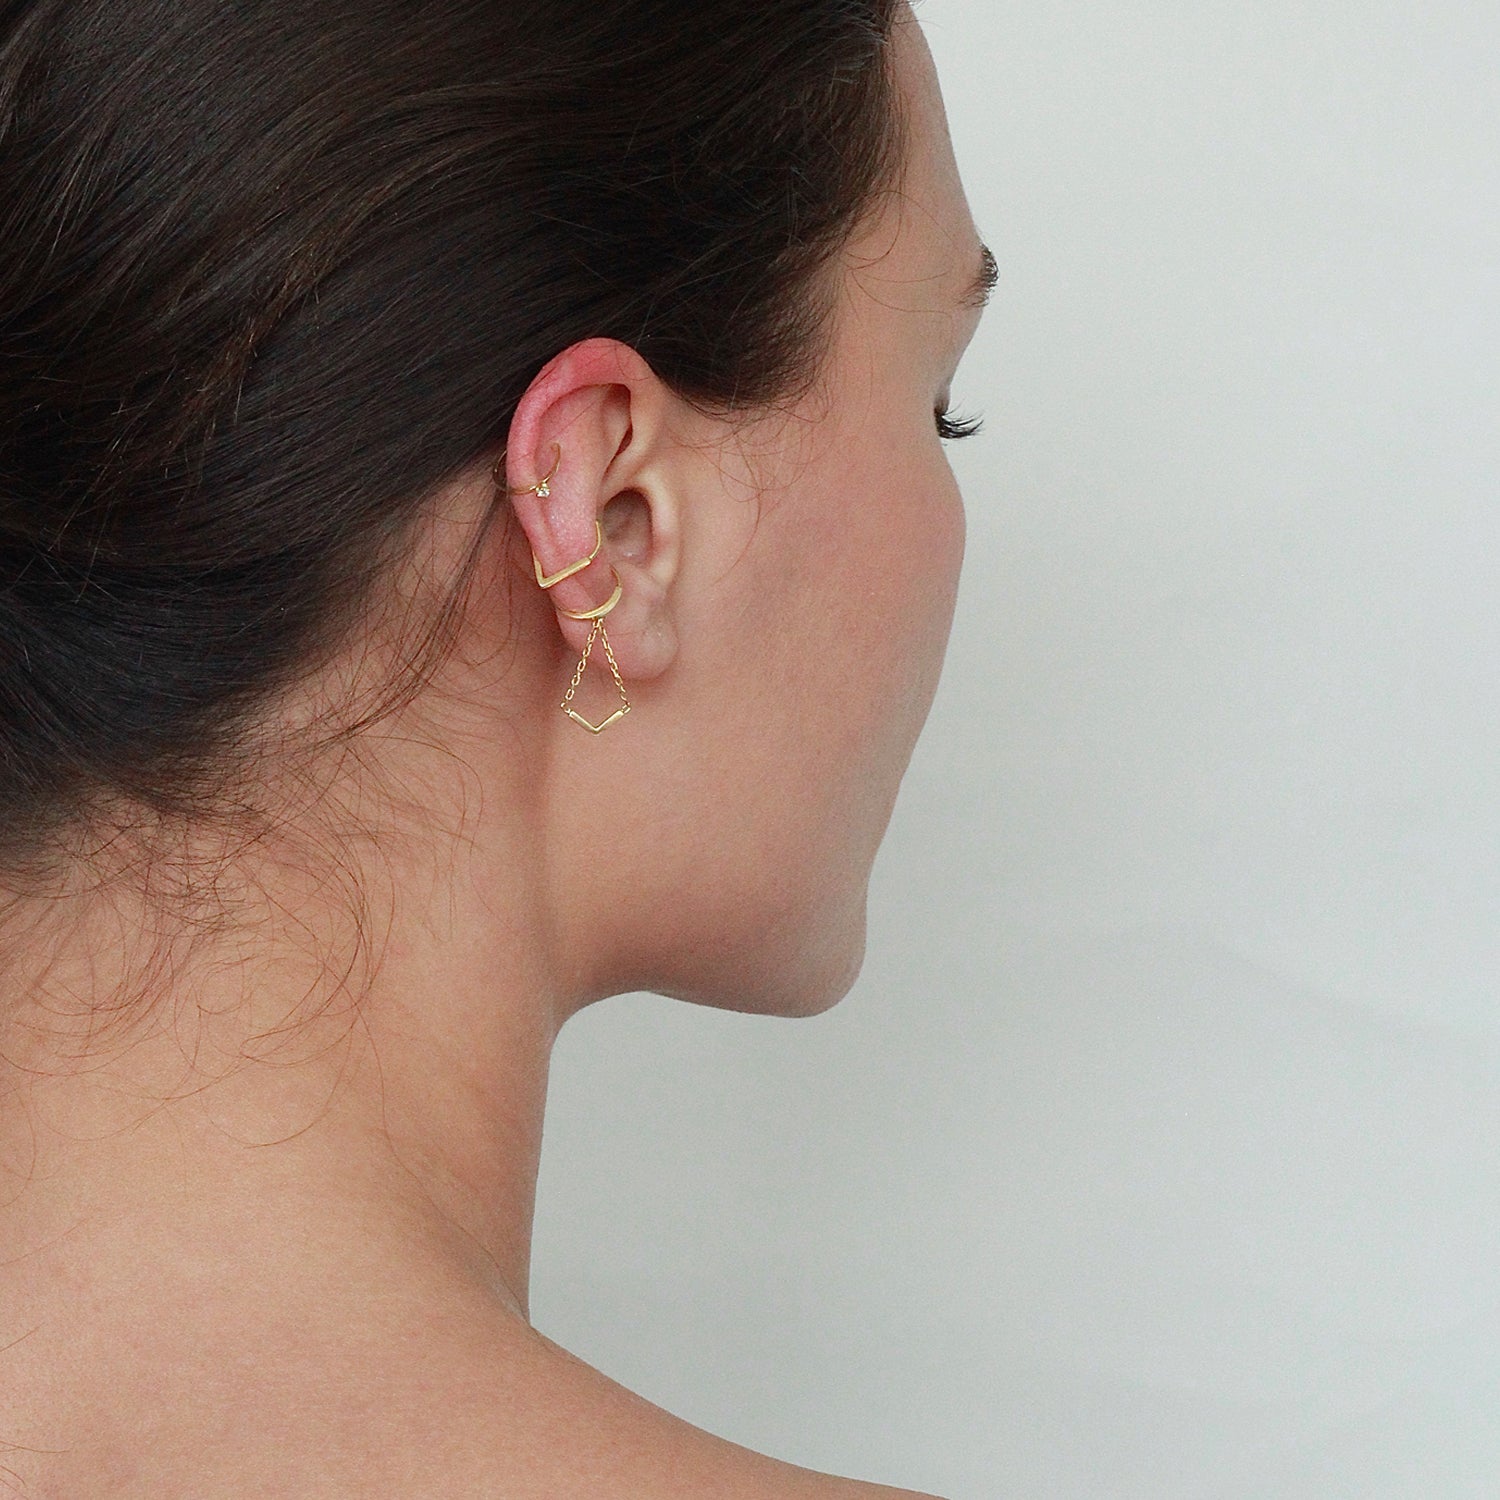 Gatsby Glamour 18ct gold ear cuff earring 